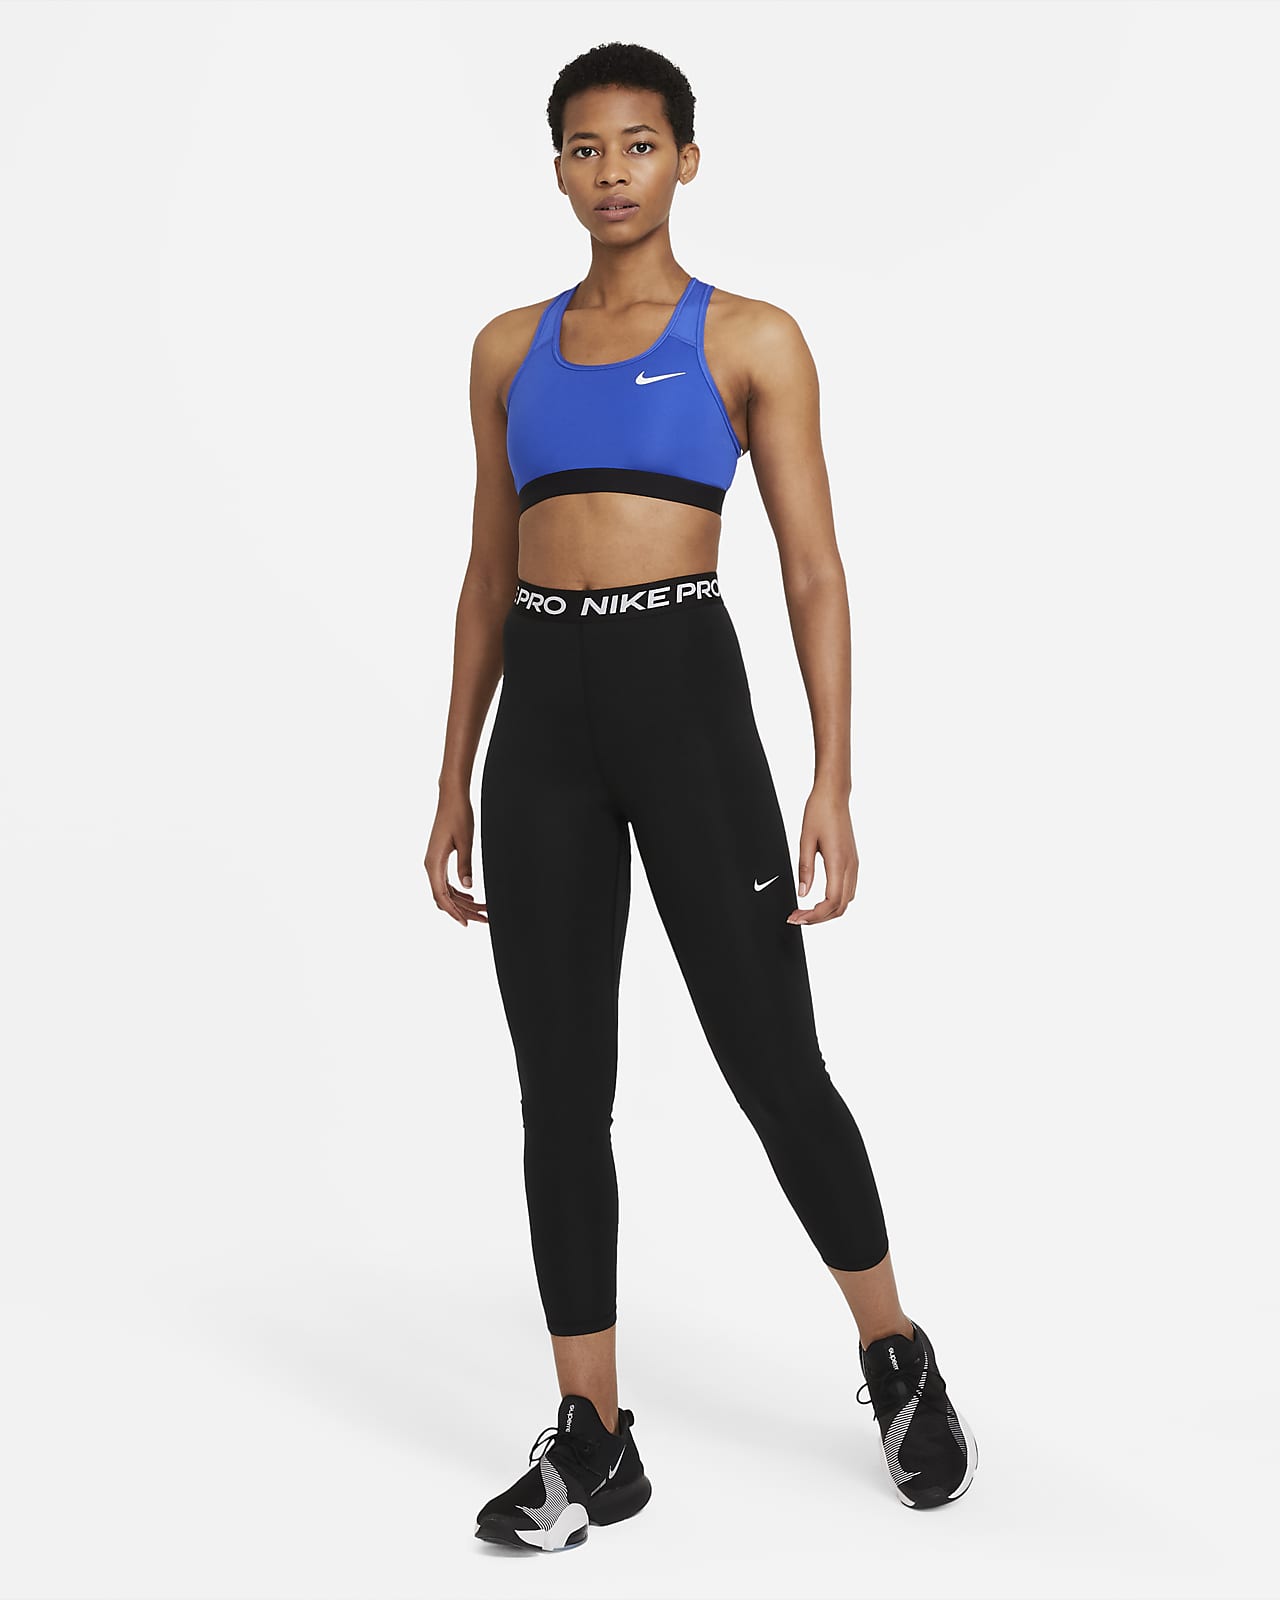 Women's leggings Nike Pro 365 Tight 7/8 Hi Rise W - smoke  grey/htr/black/black, Tennis Zone